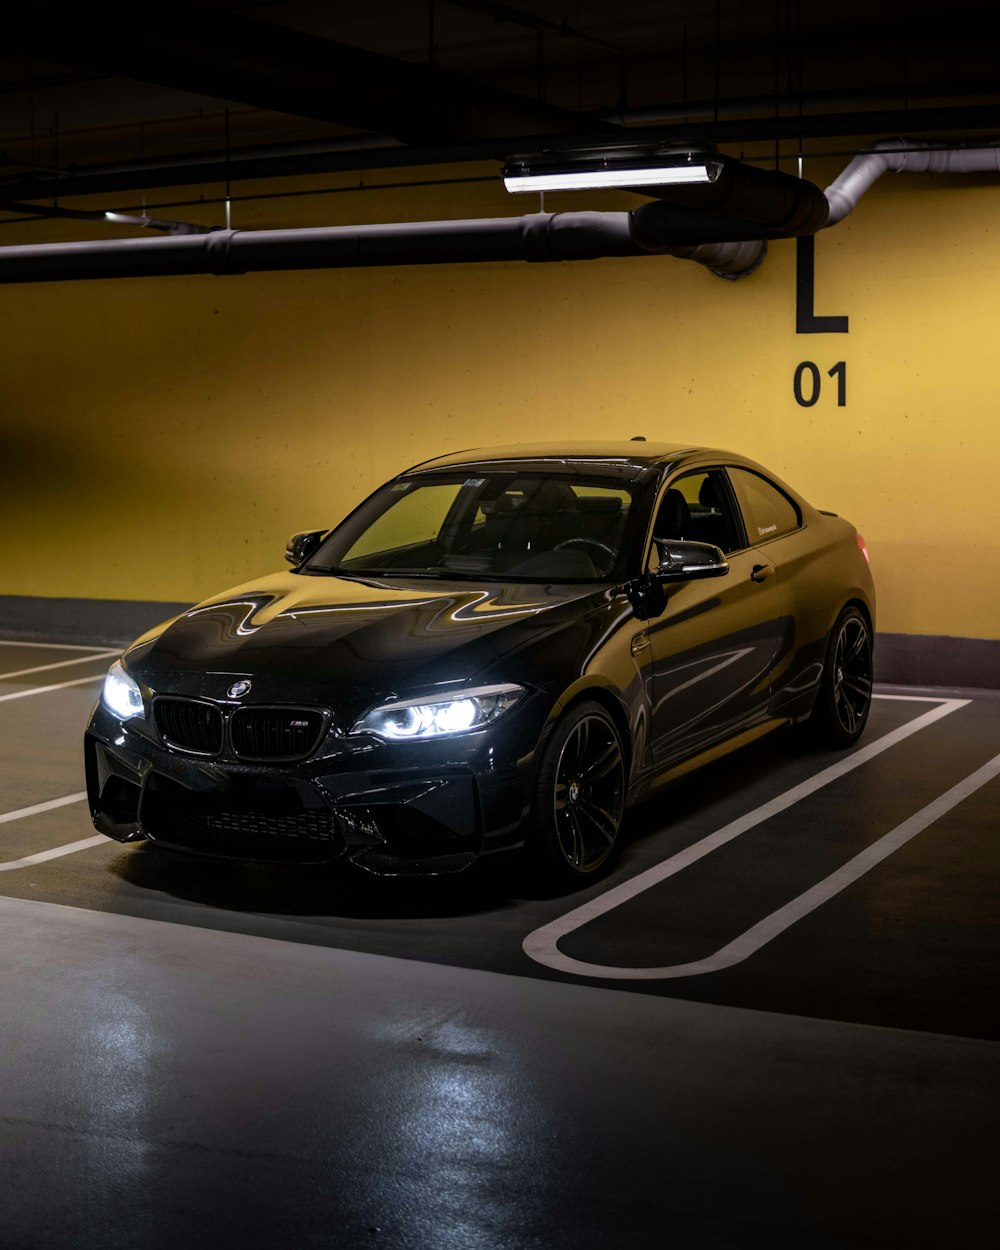 a black car parked in a parking garage